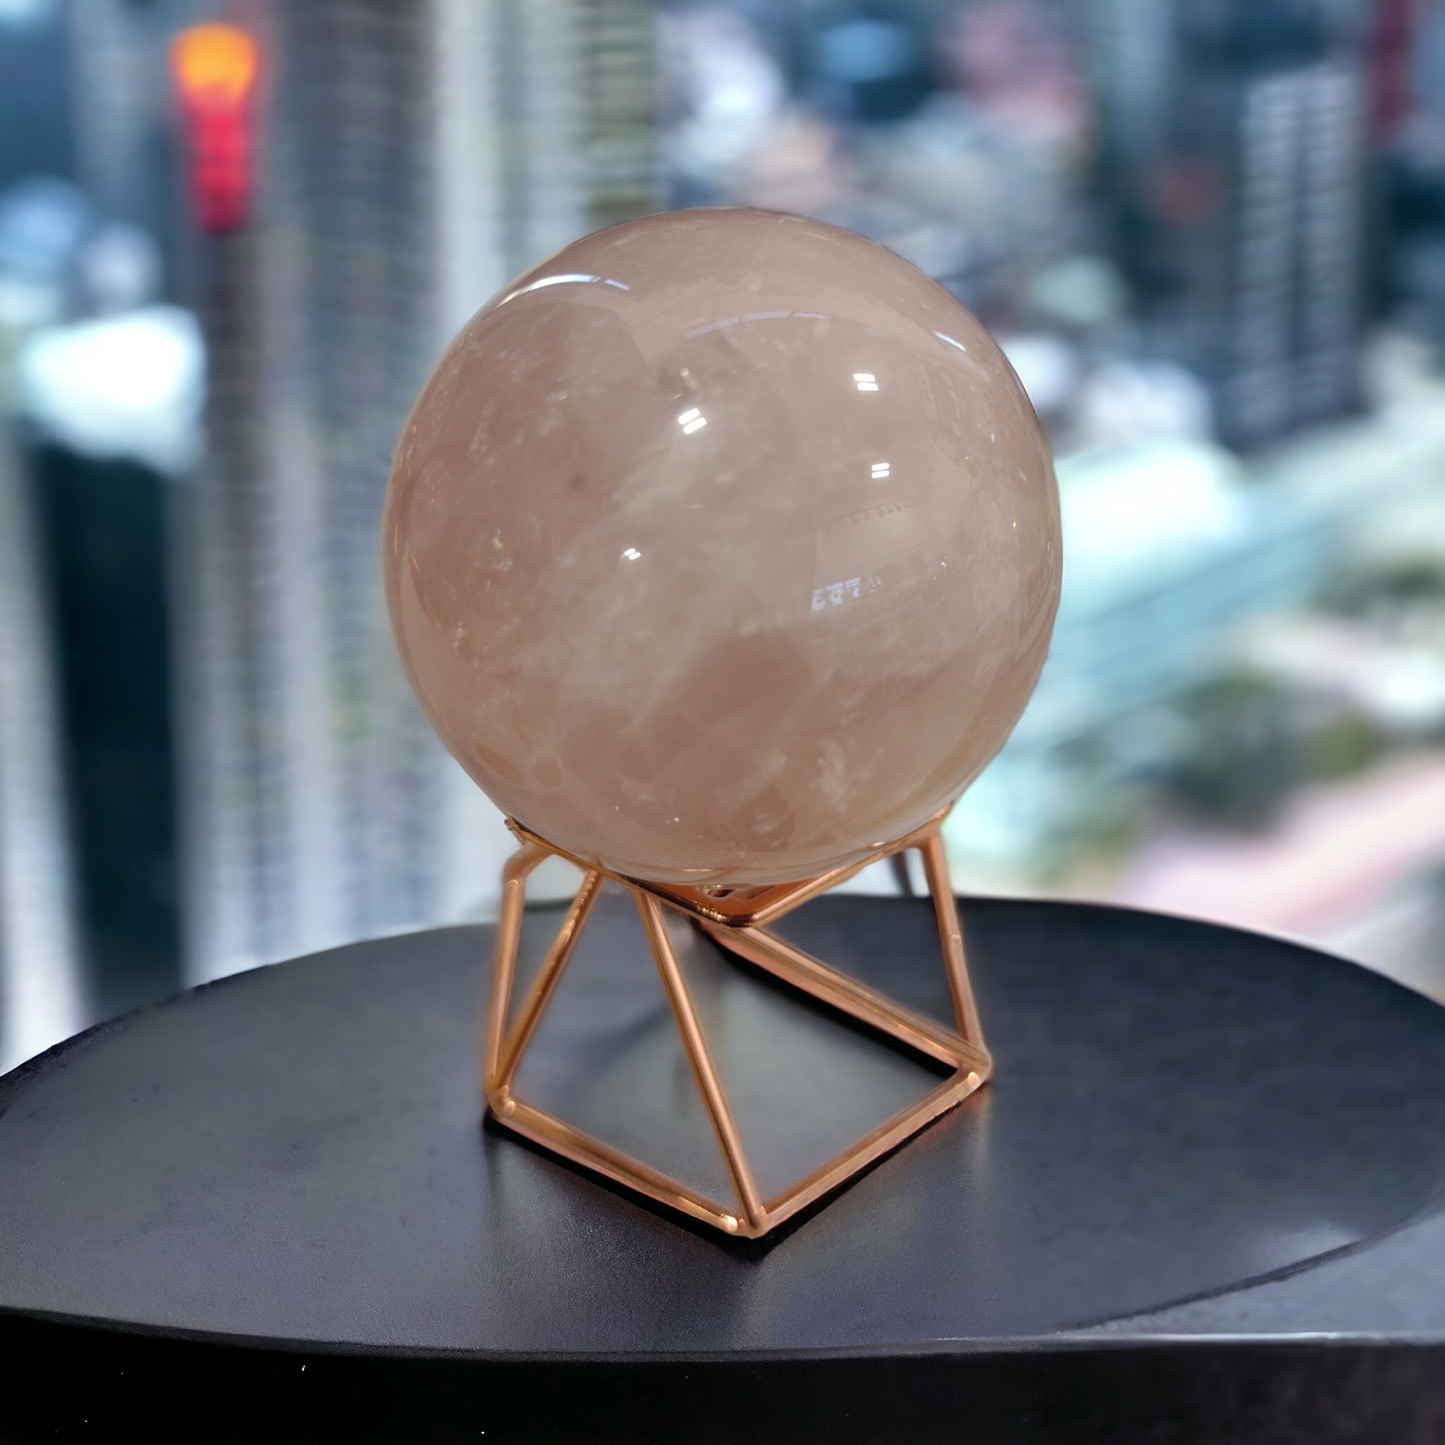 Rose Quartz Sphere Crystals N171.( Free Shipping )